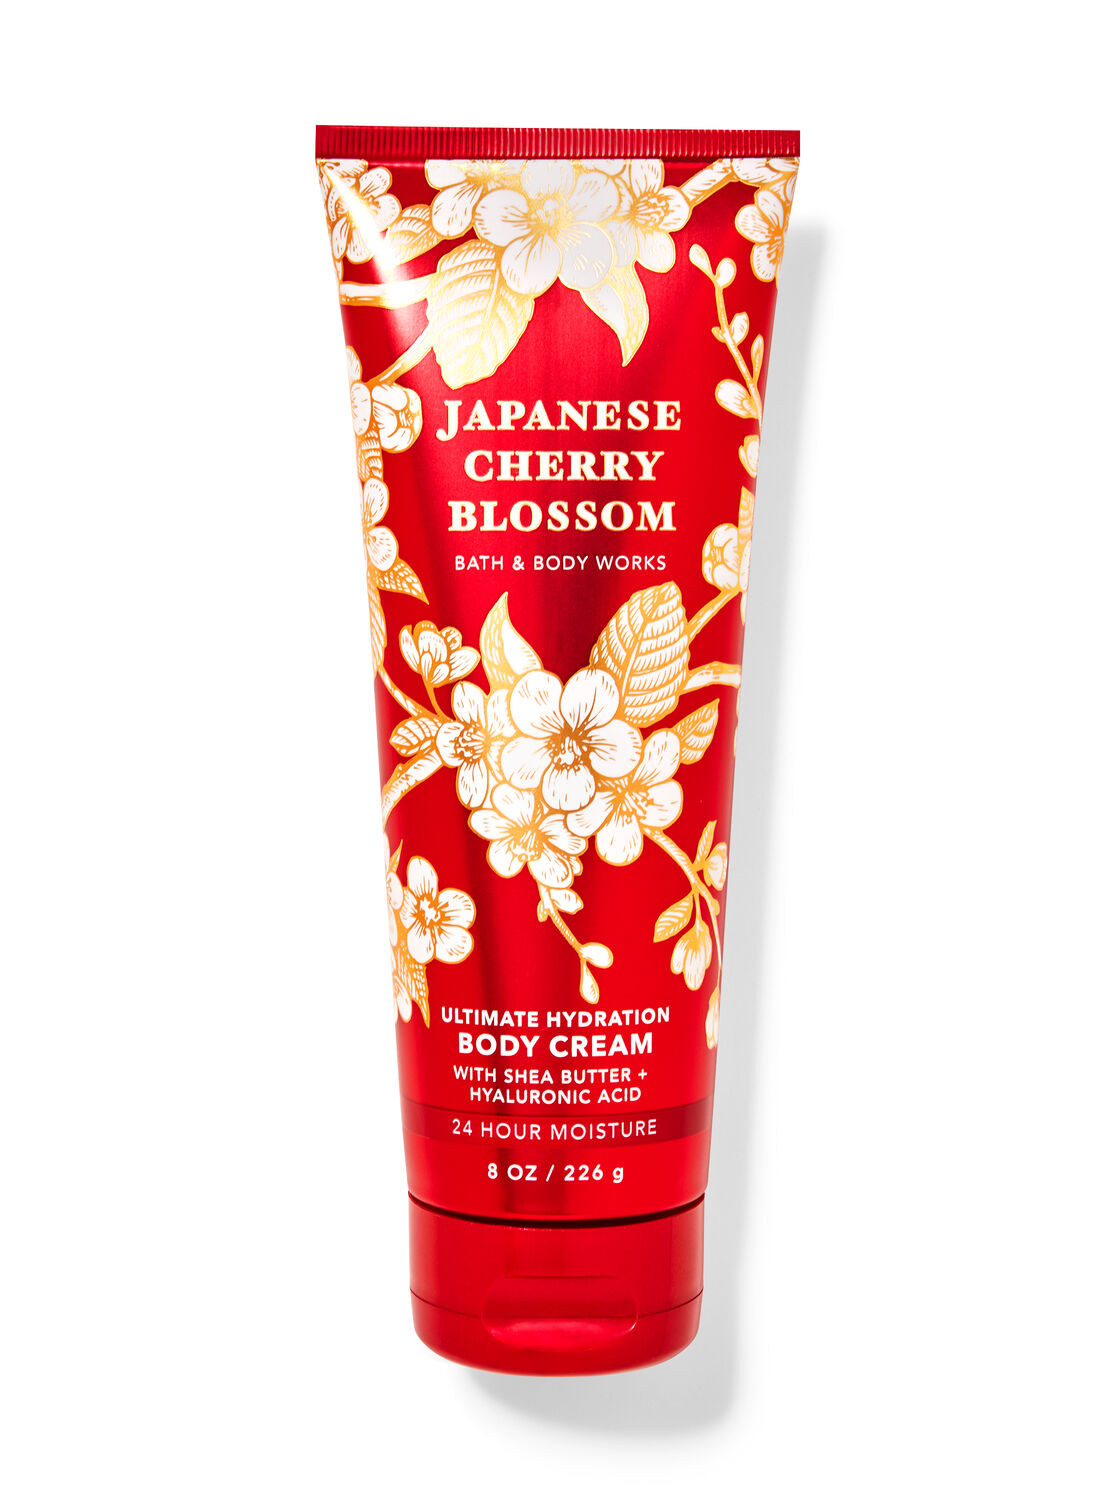 Japanese Cherry Blossom Lotion Review | escapeauthority.com